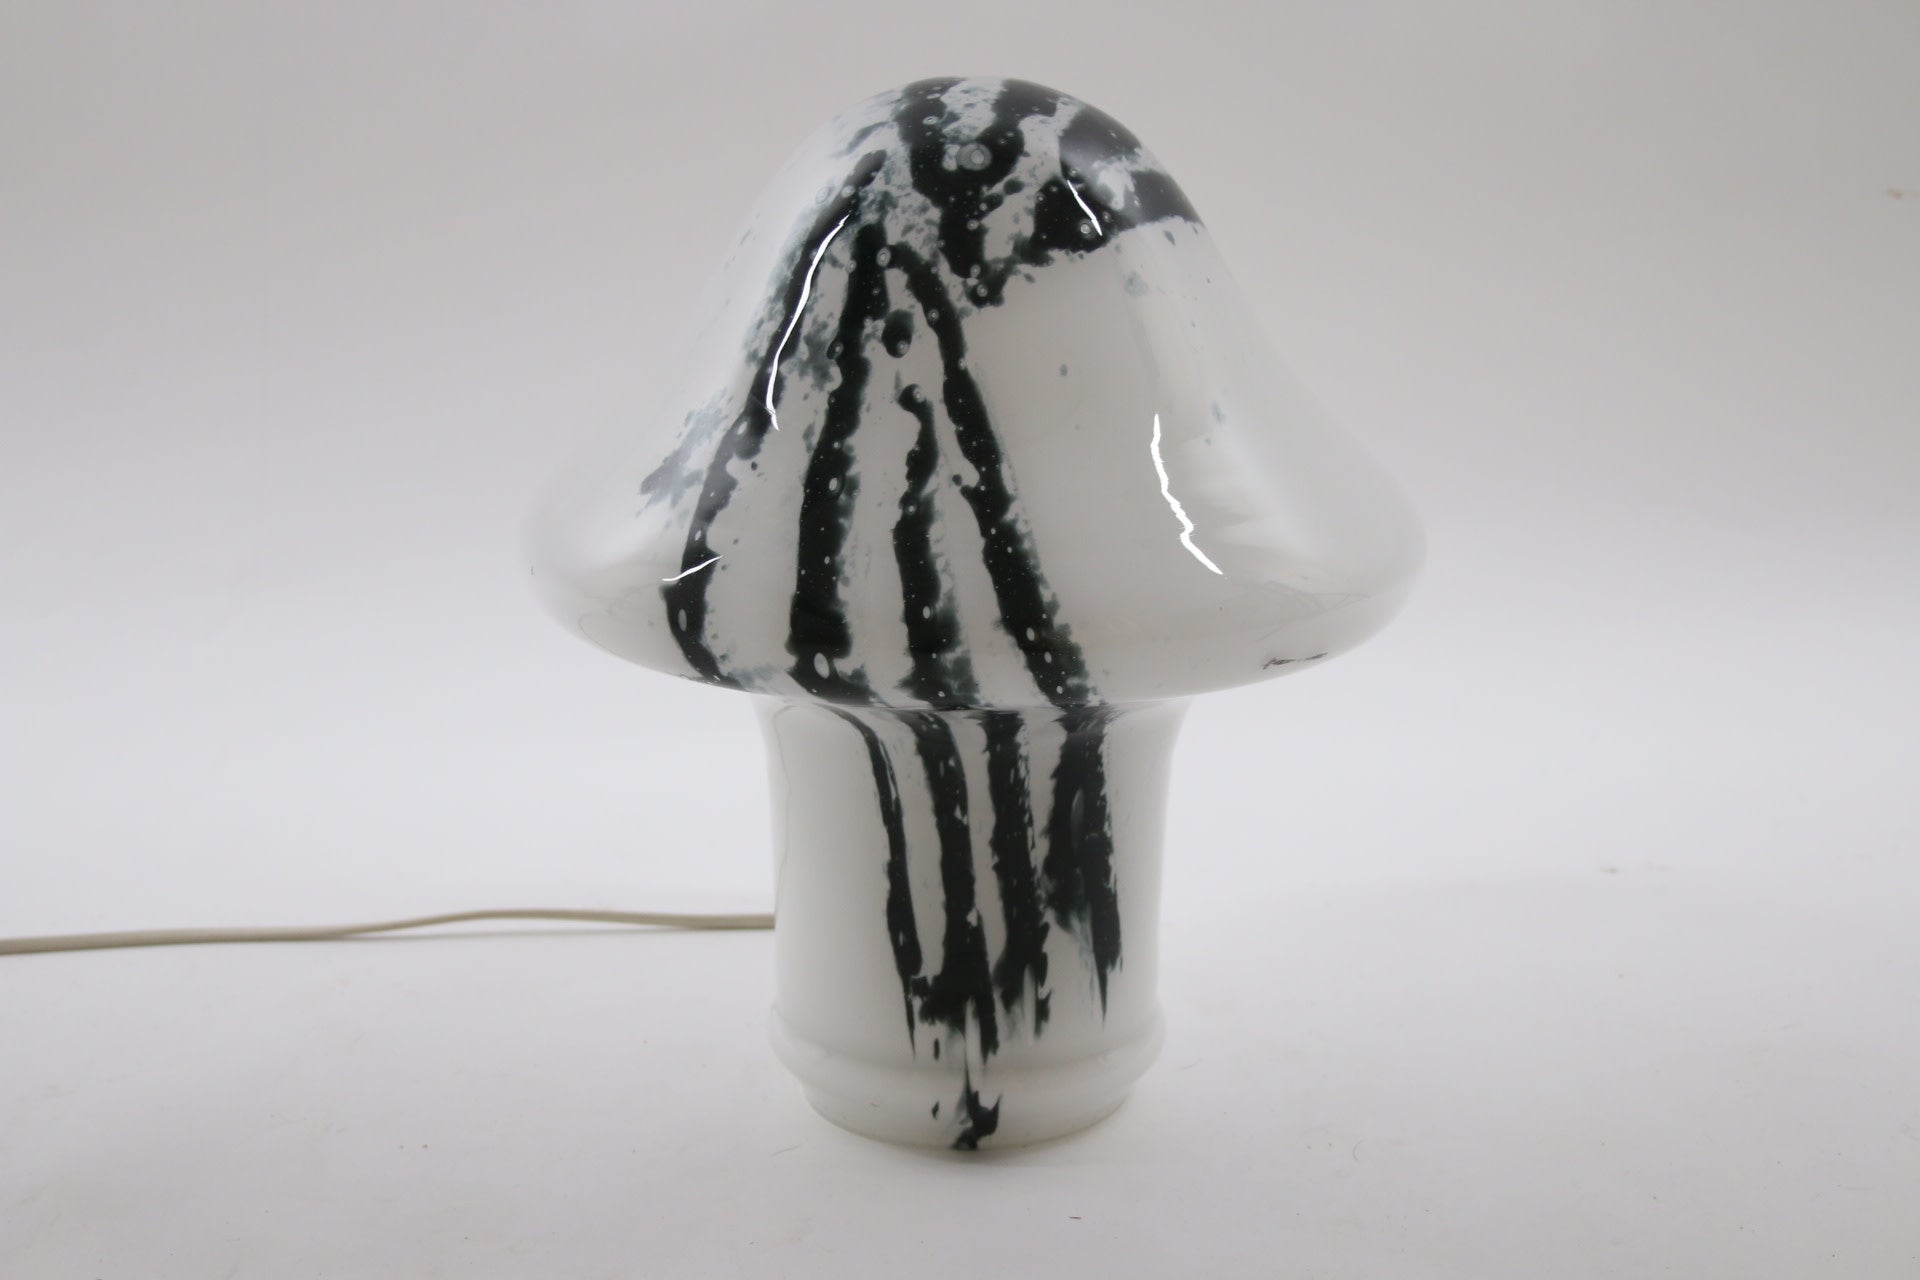 Tafellampje murano mushroom voorkant